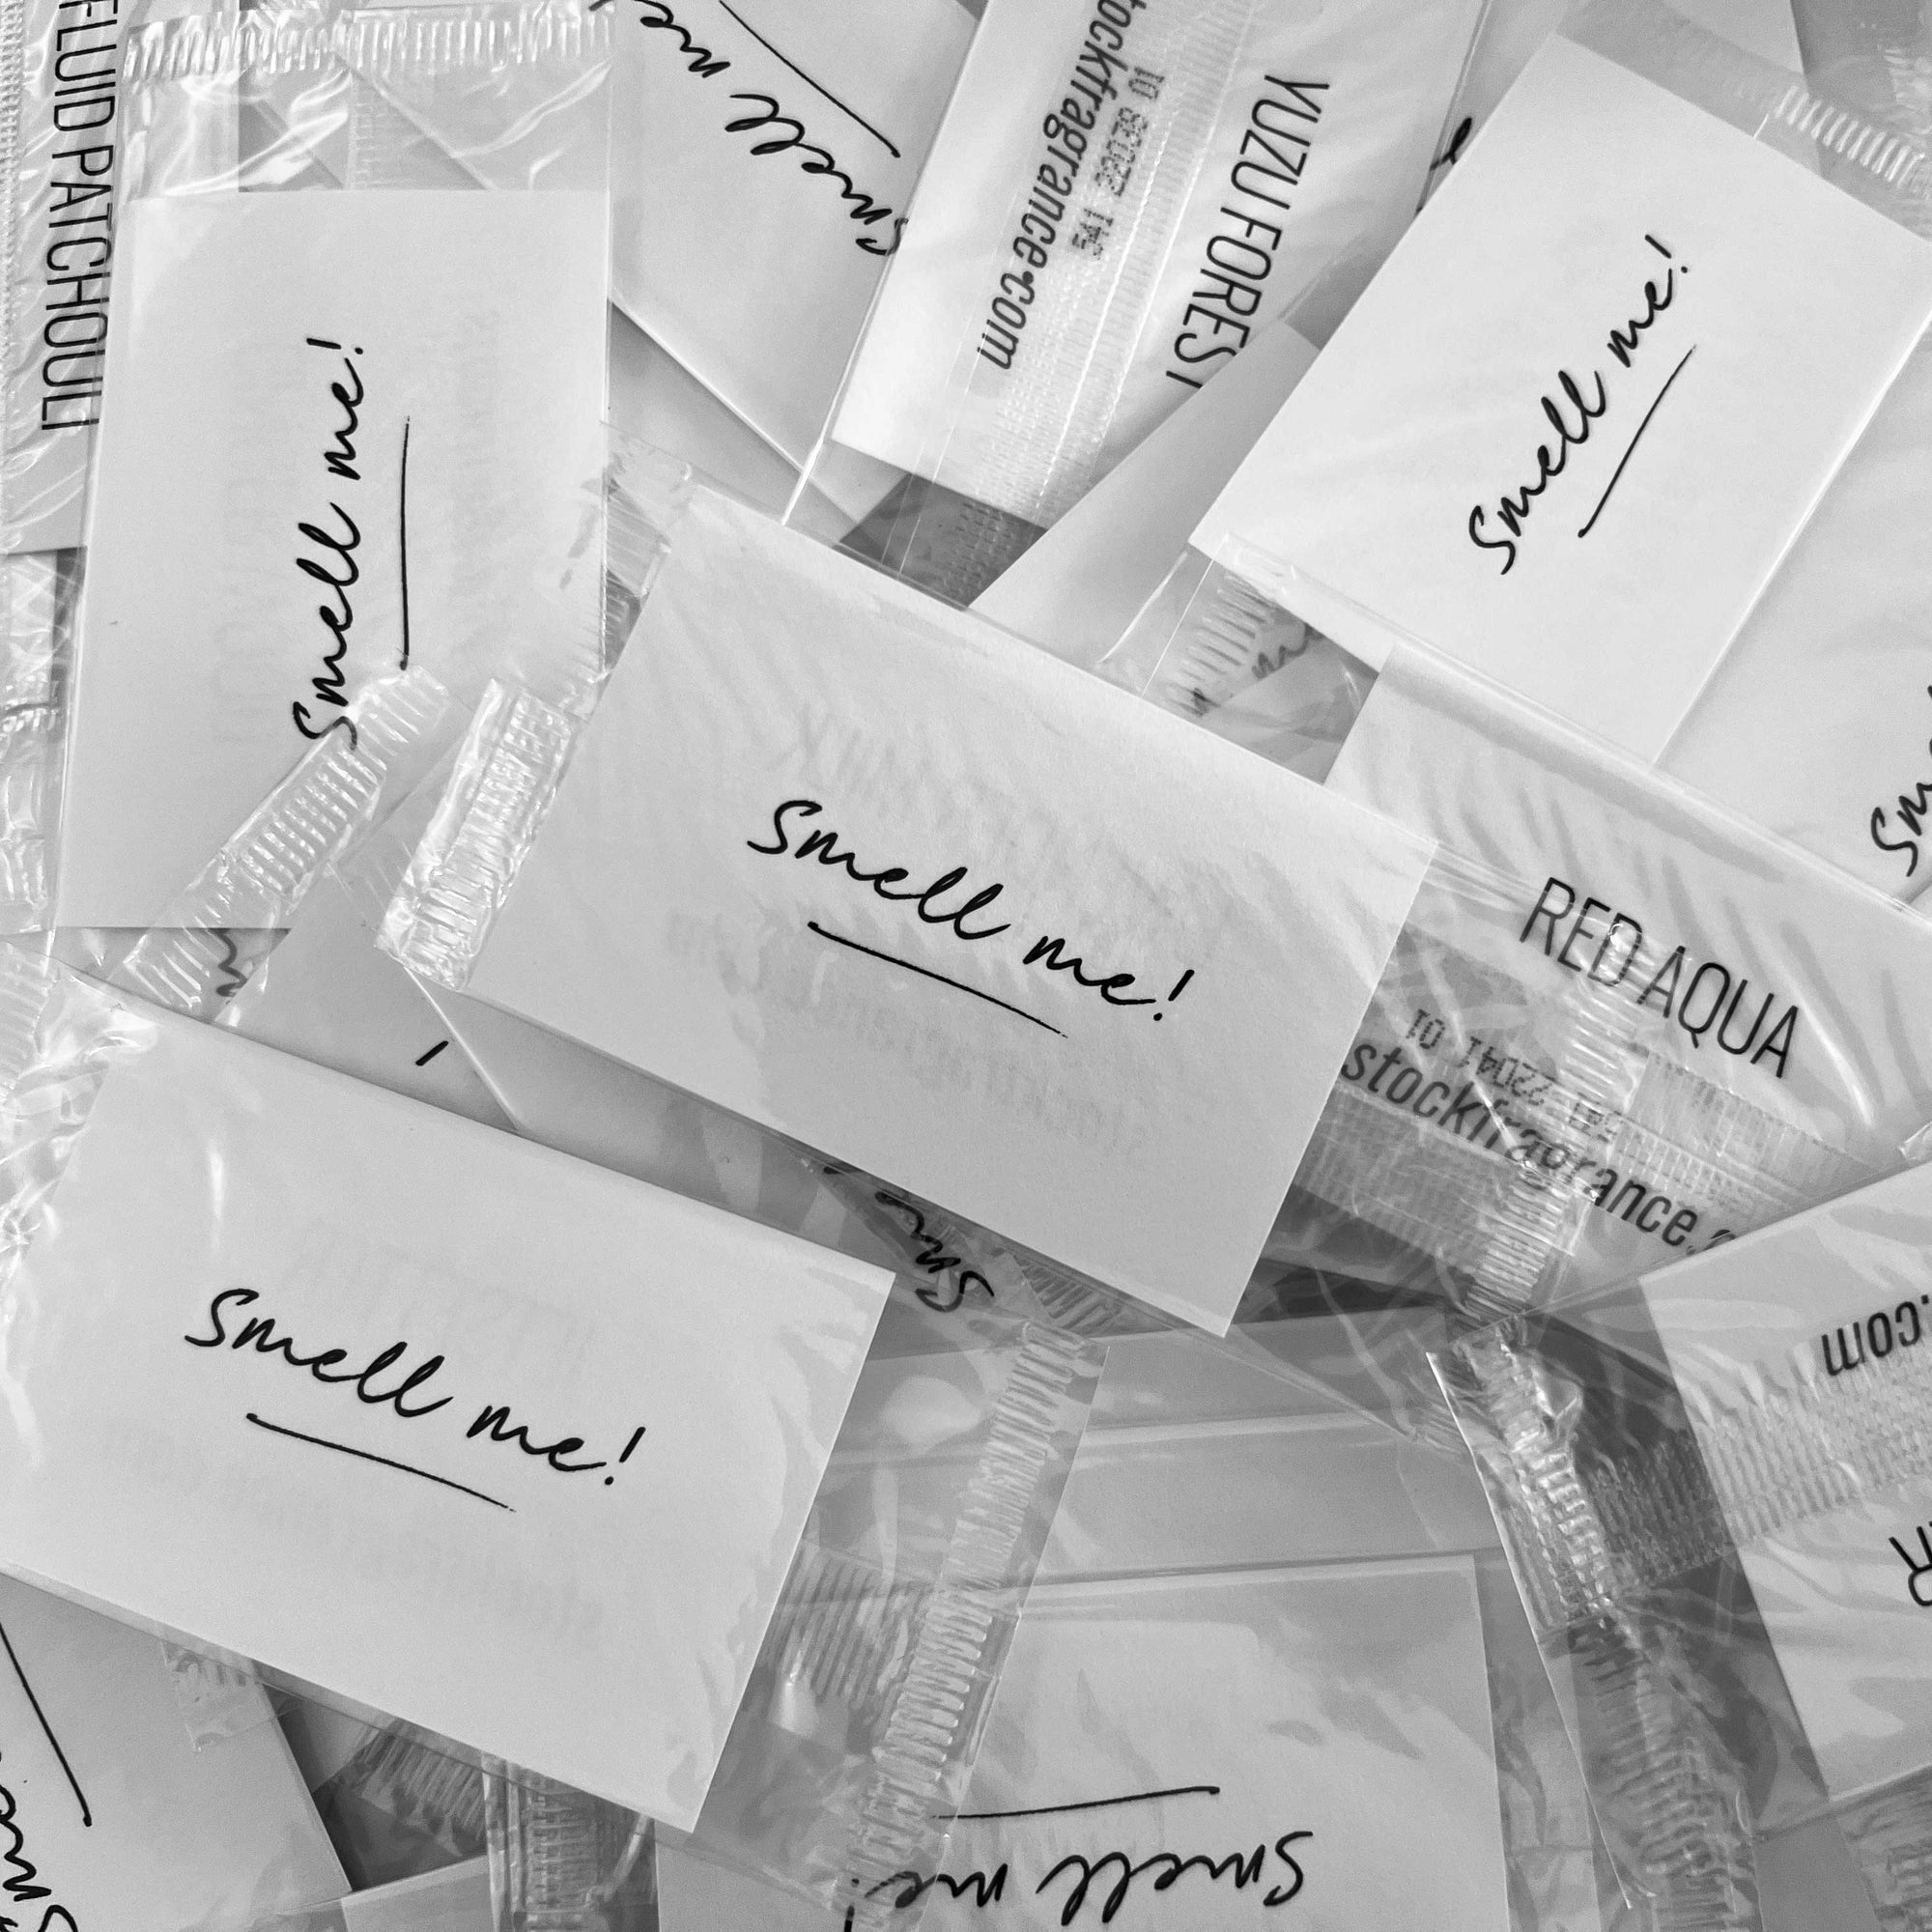 stock fragrance pre-scented smelling sample blotter cards